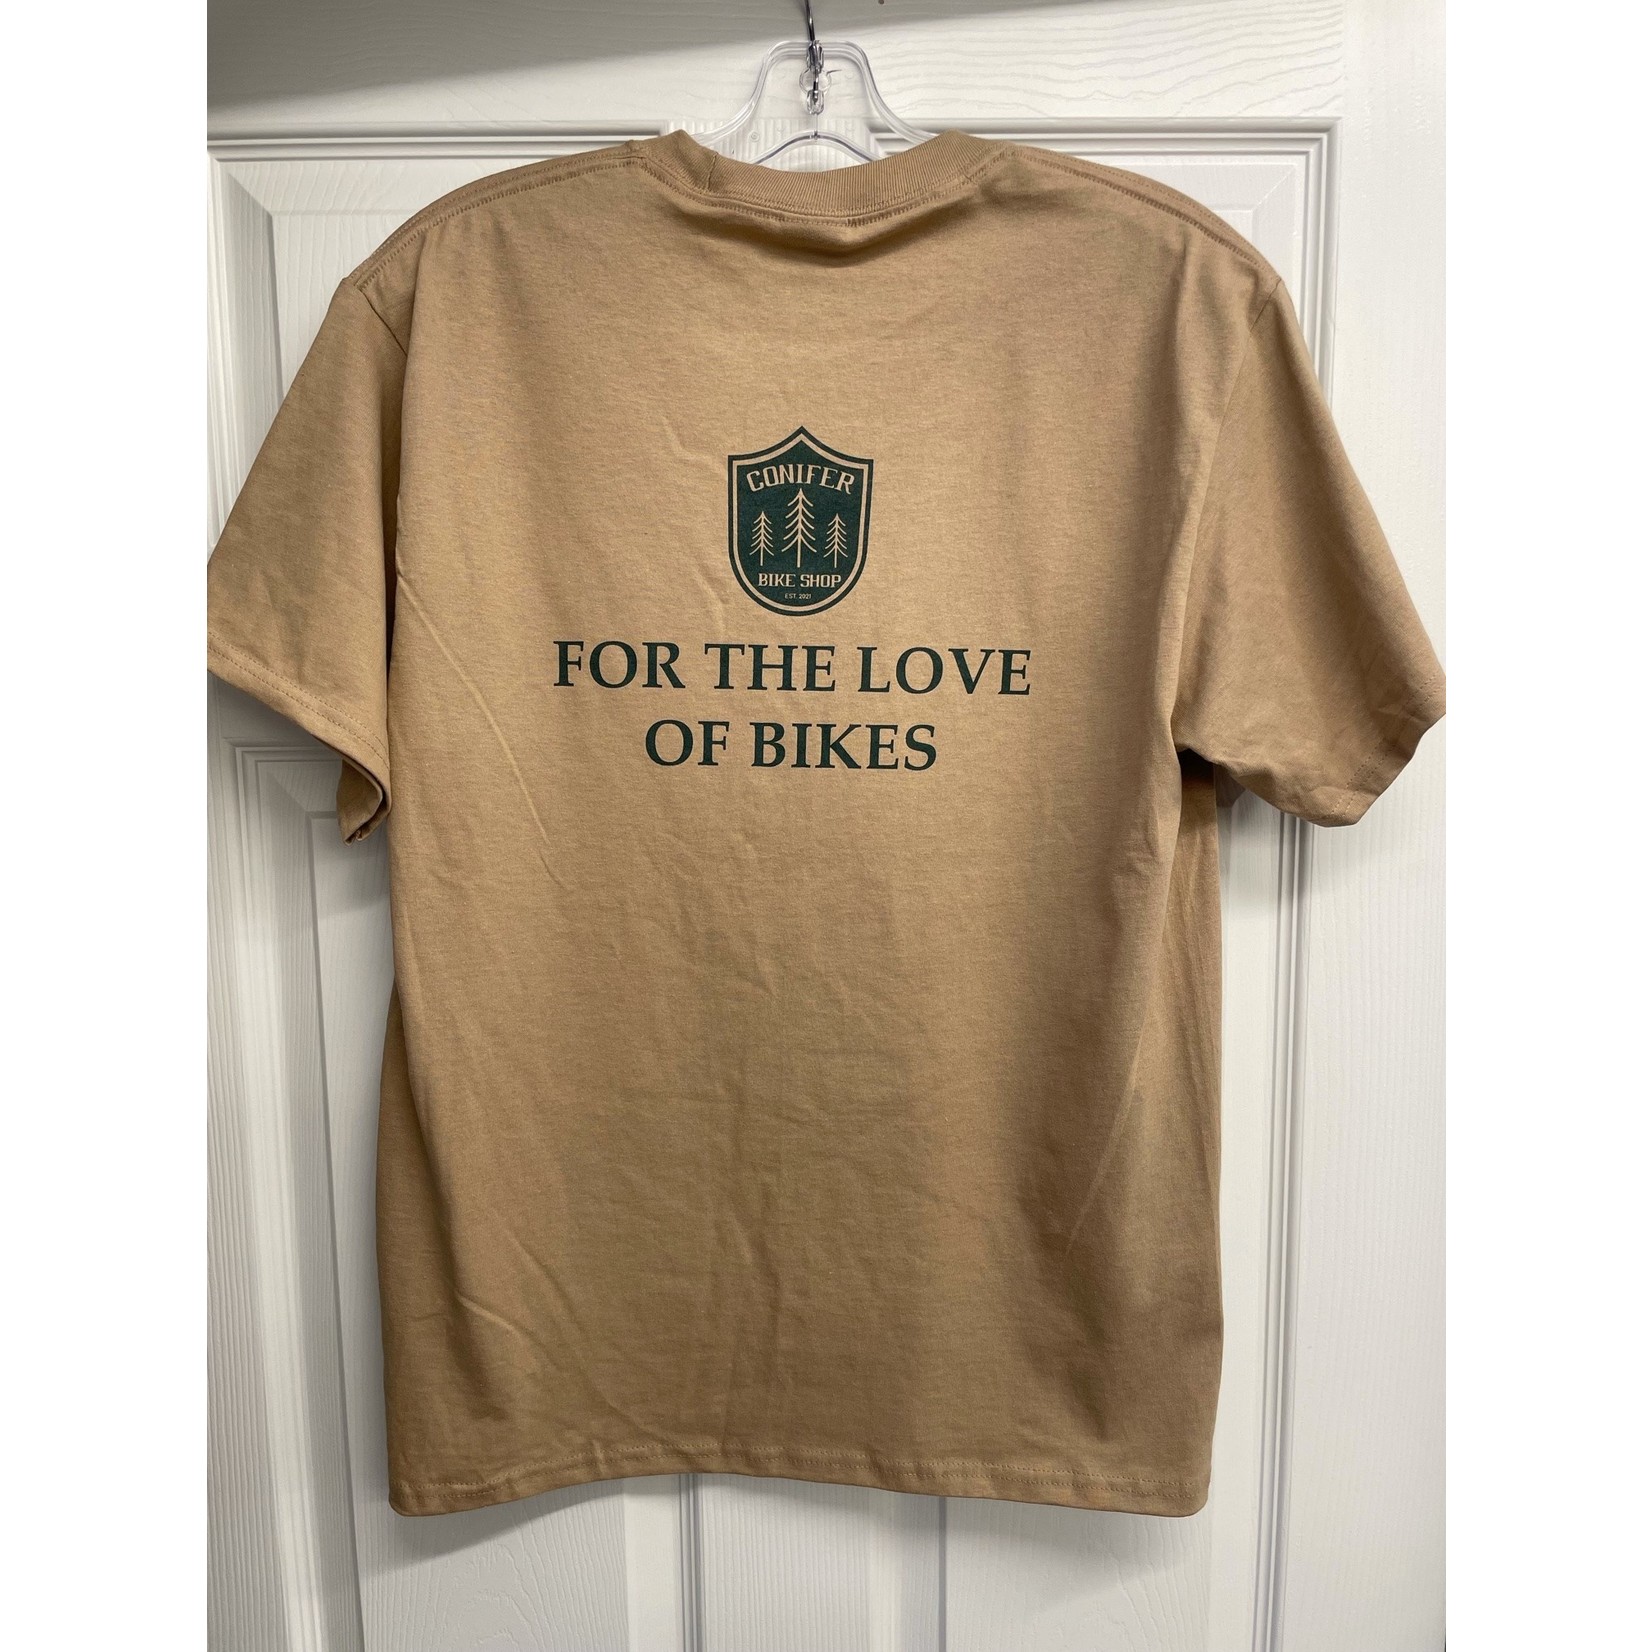 Conifer Bike Shop Conifer Bike Shop T-Shirt